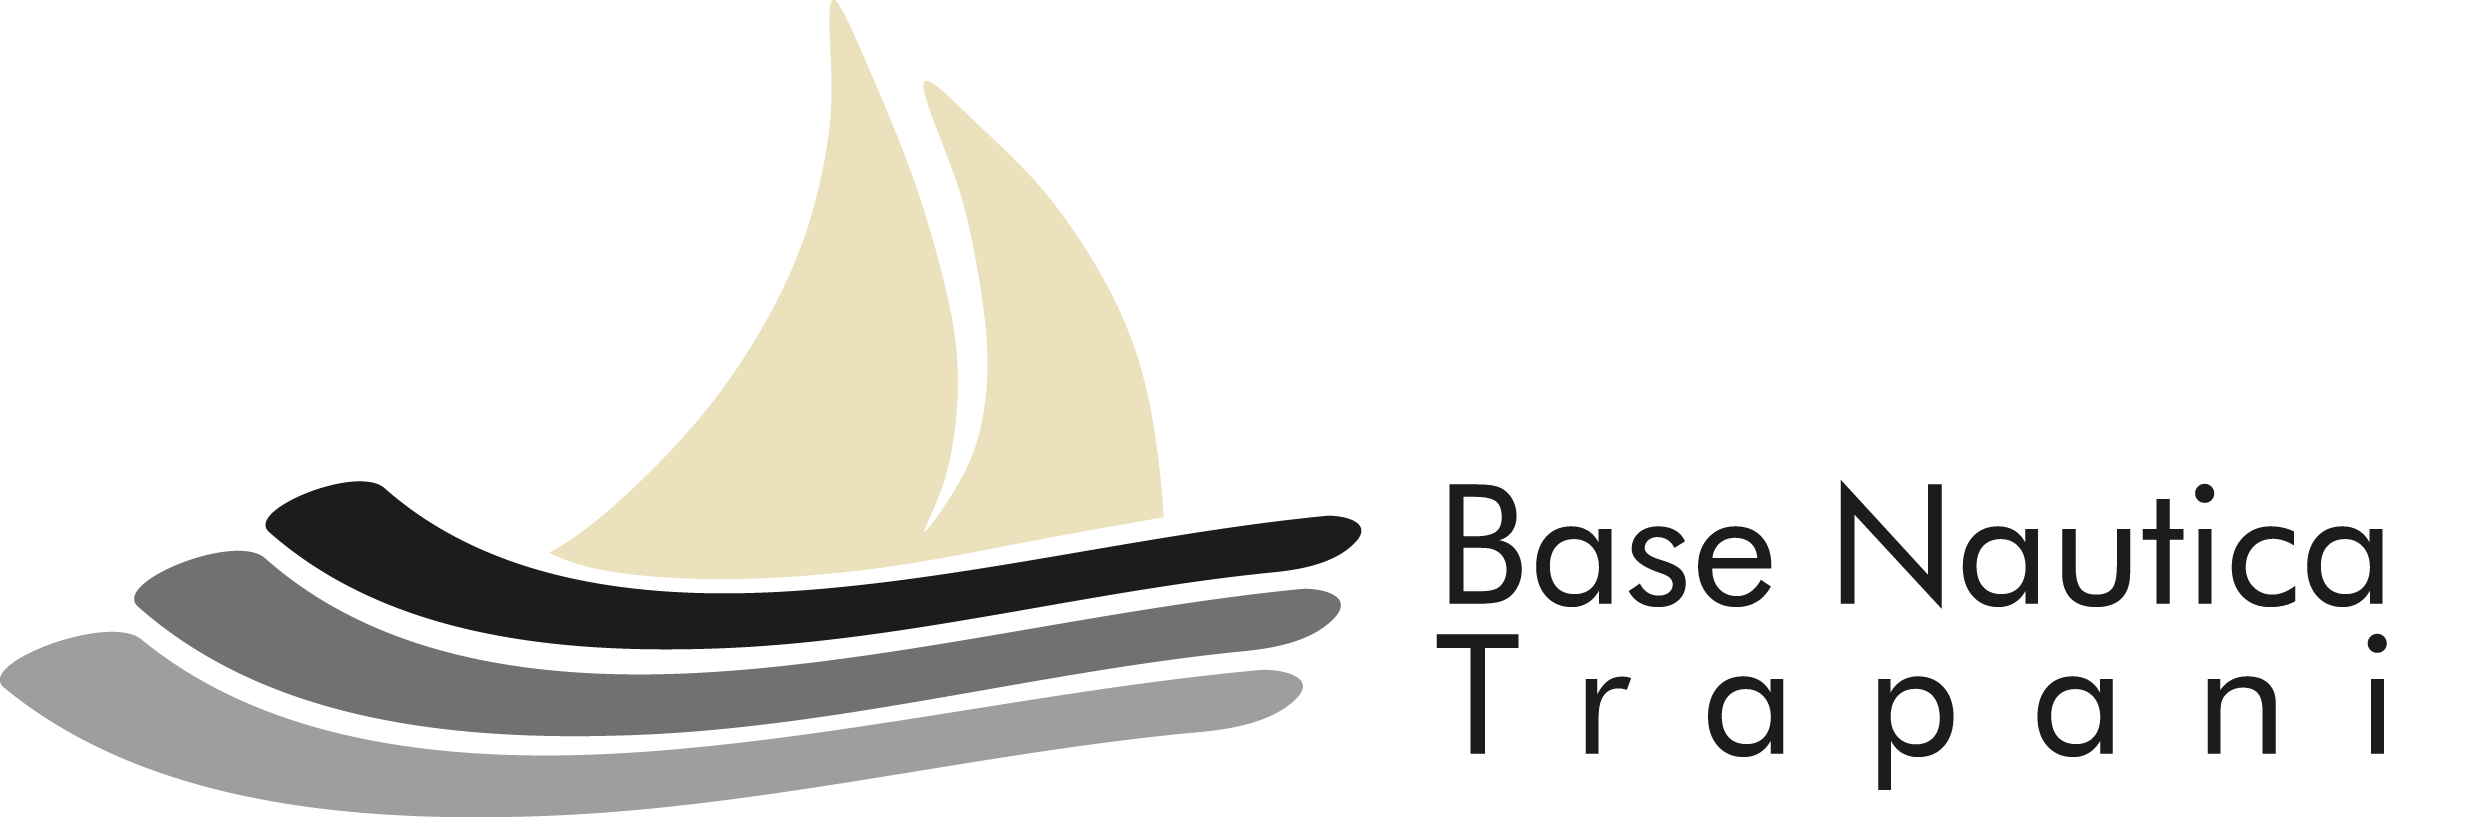 Base Nautica Trapani